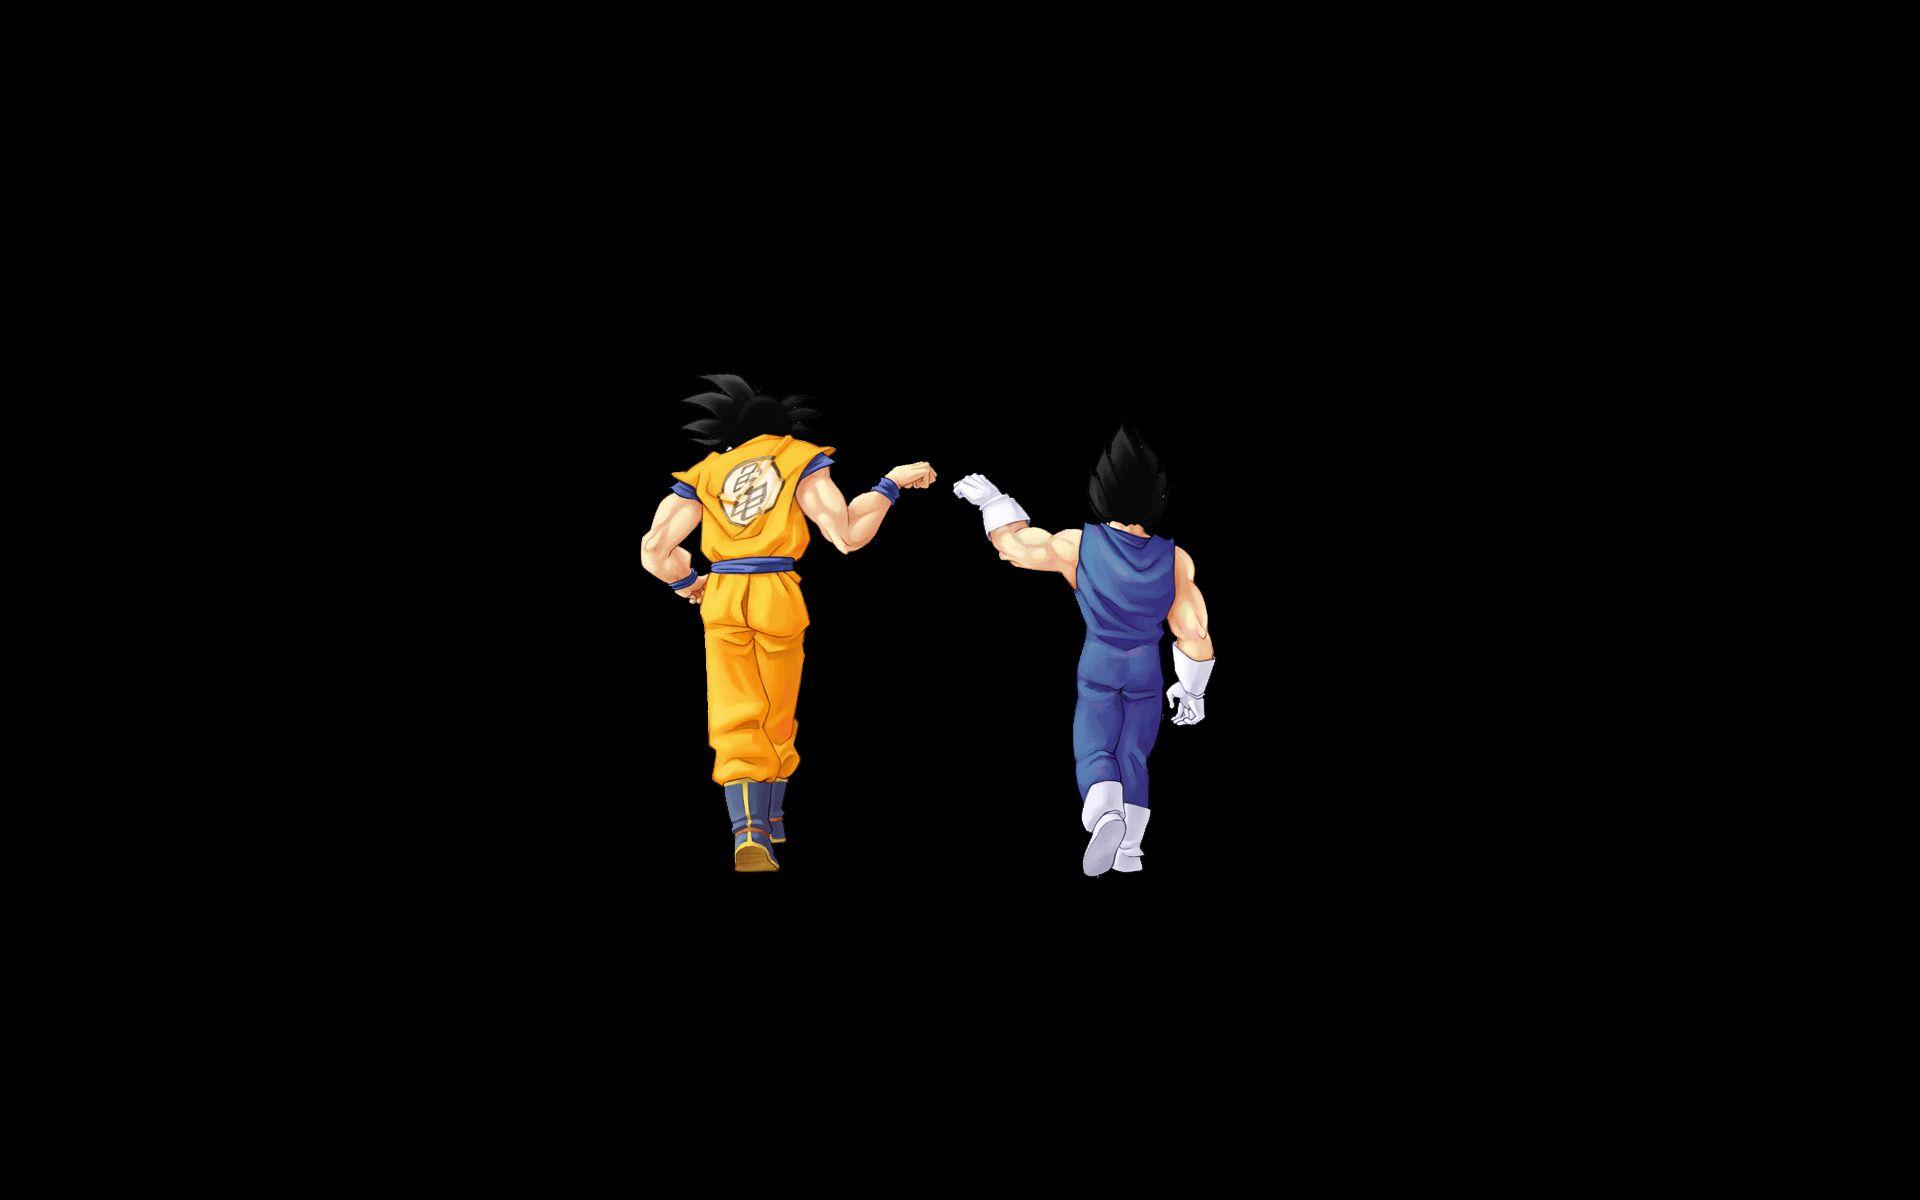 Dragon Ball Z Goku and Vegeta Black Background Wallpaper. geek